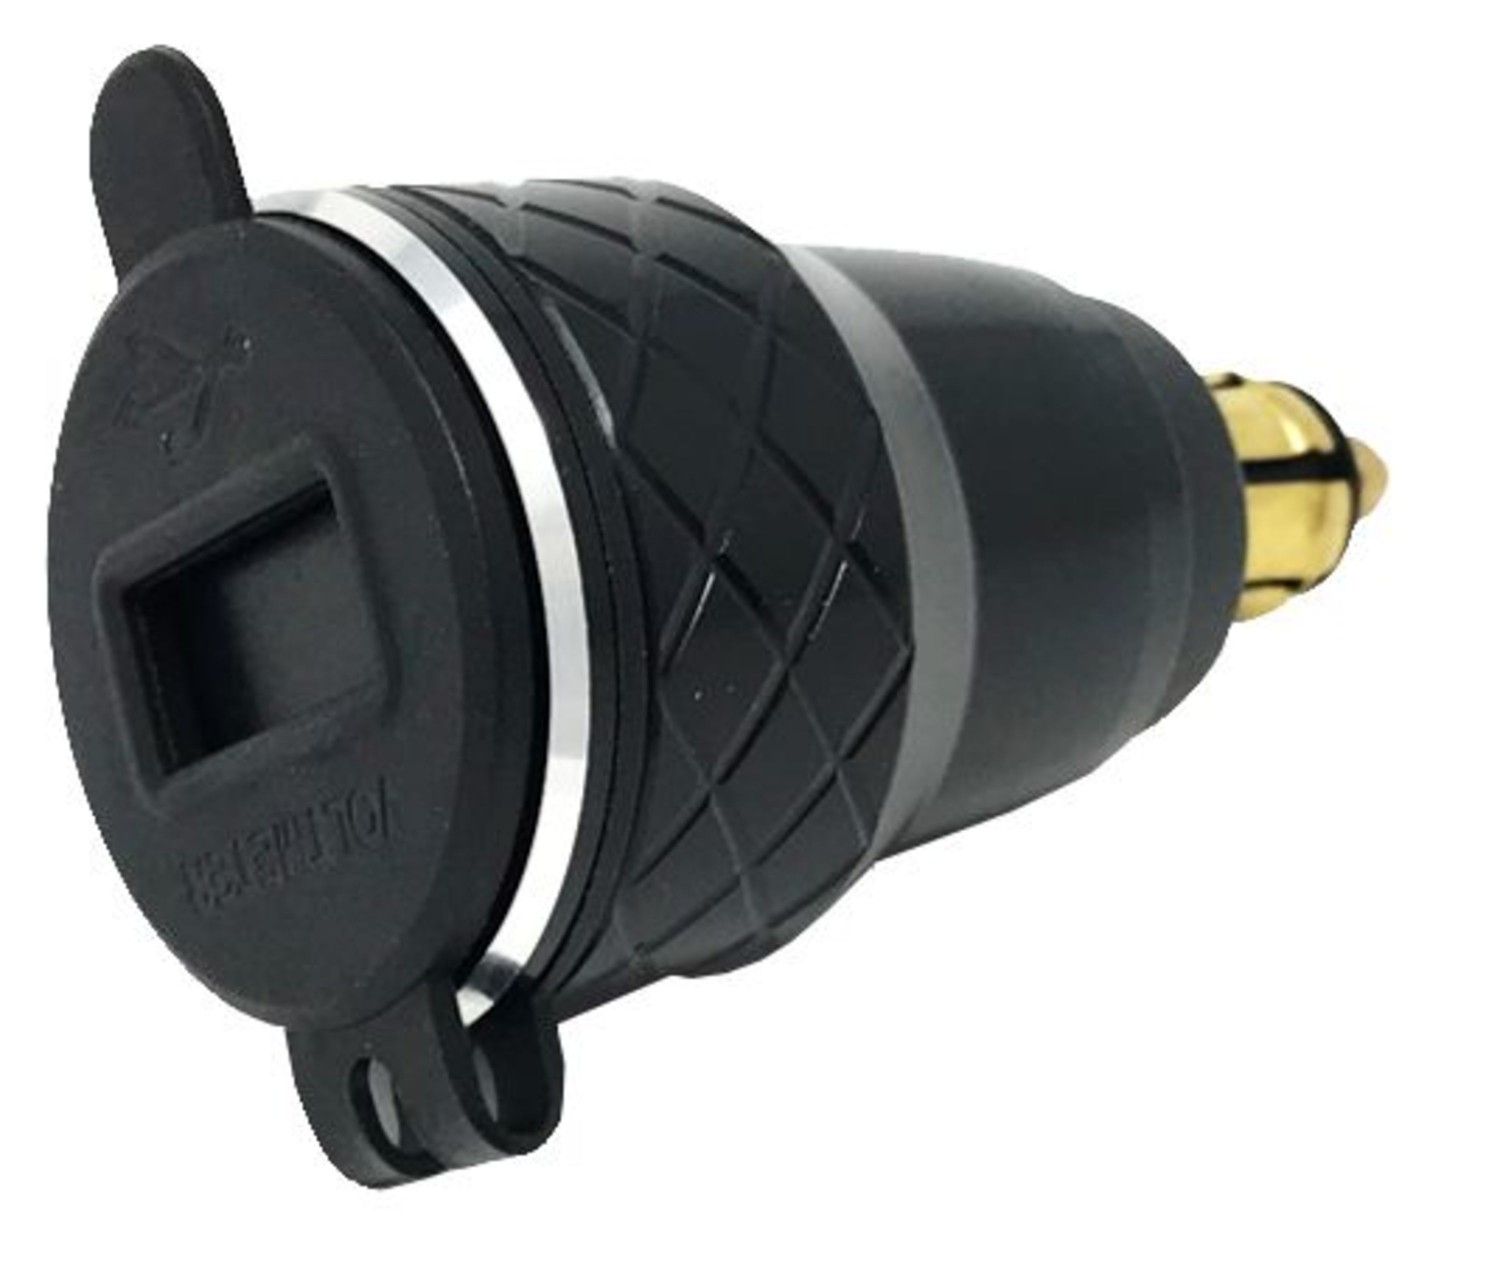 DIN adaptér Interphone s 2x USB výstupem pro motocykly, max. 4.2 A, černý